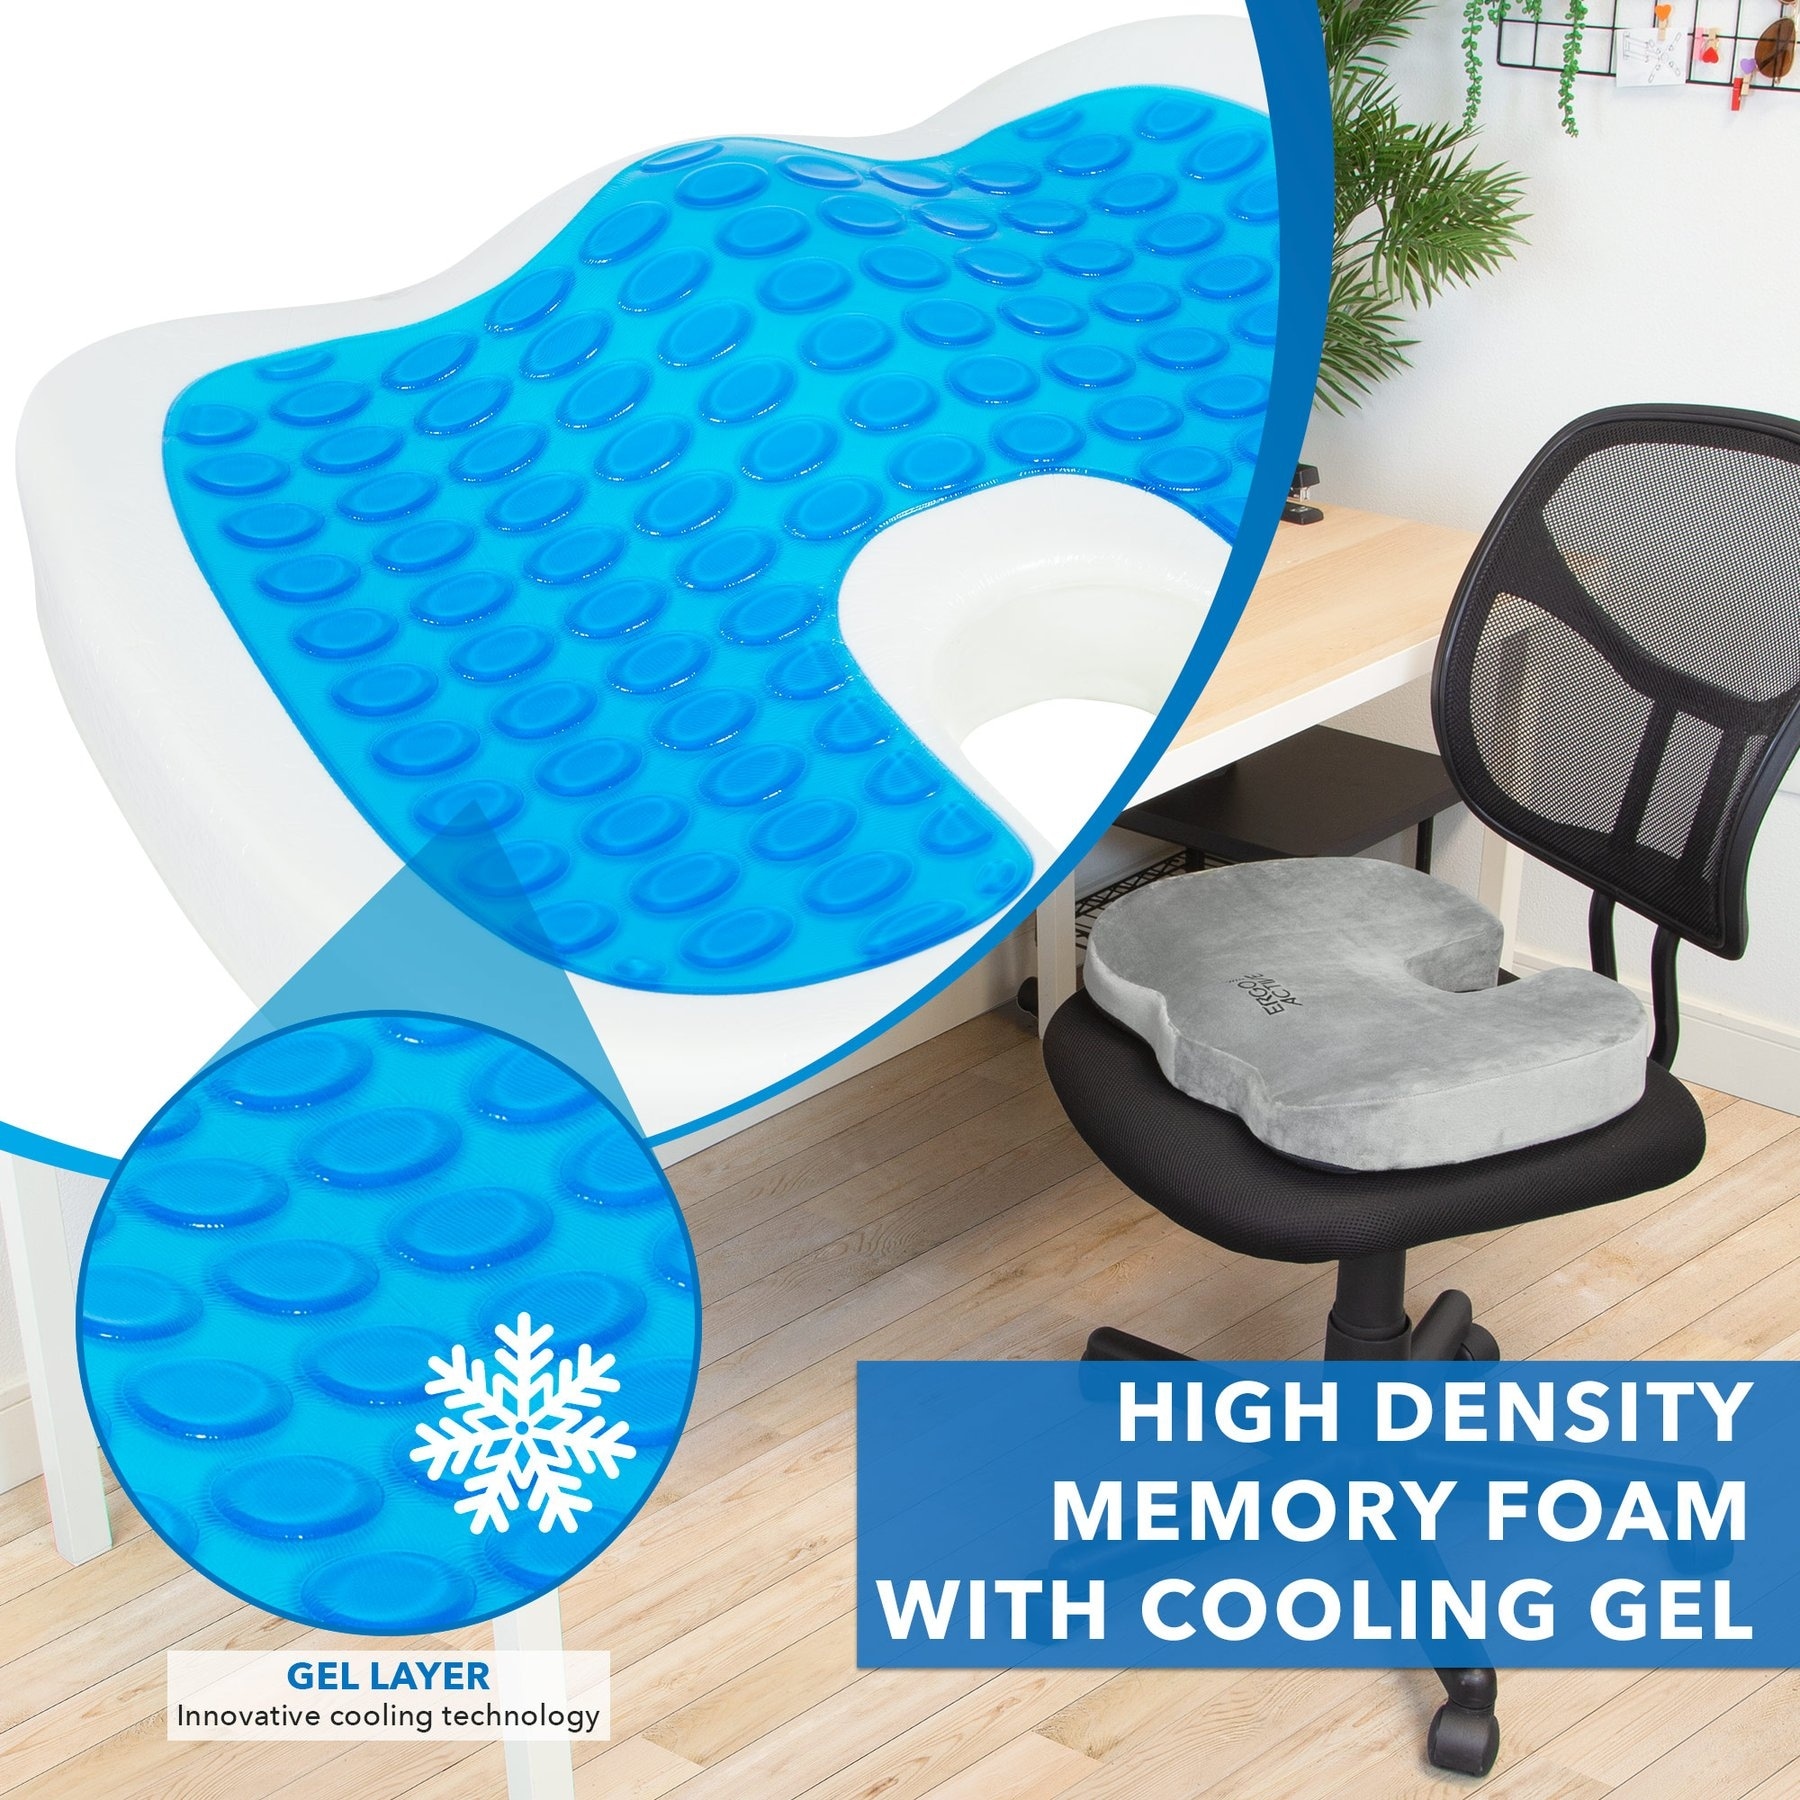 Comfilife Gel Enhanced Memory Foam Seat Cushion New for Sale in Downey, CA  - OfferUp